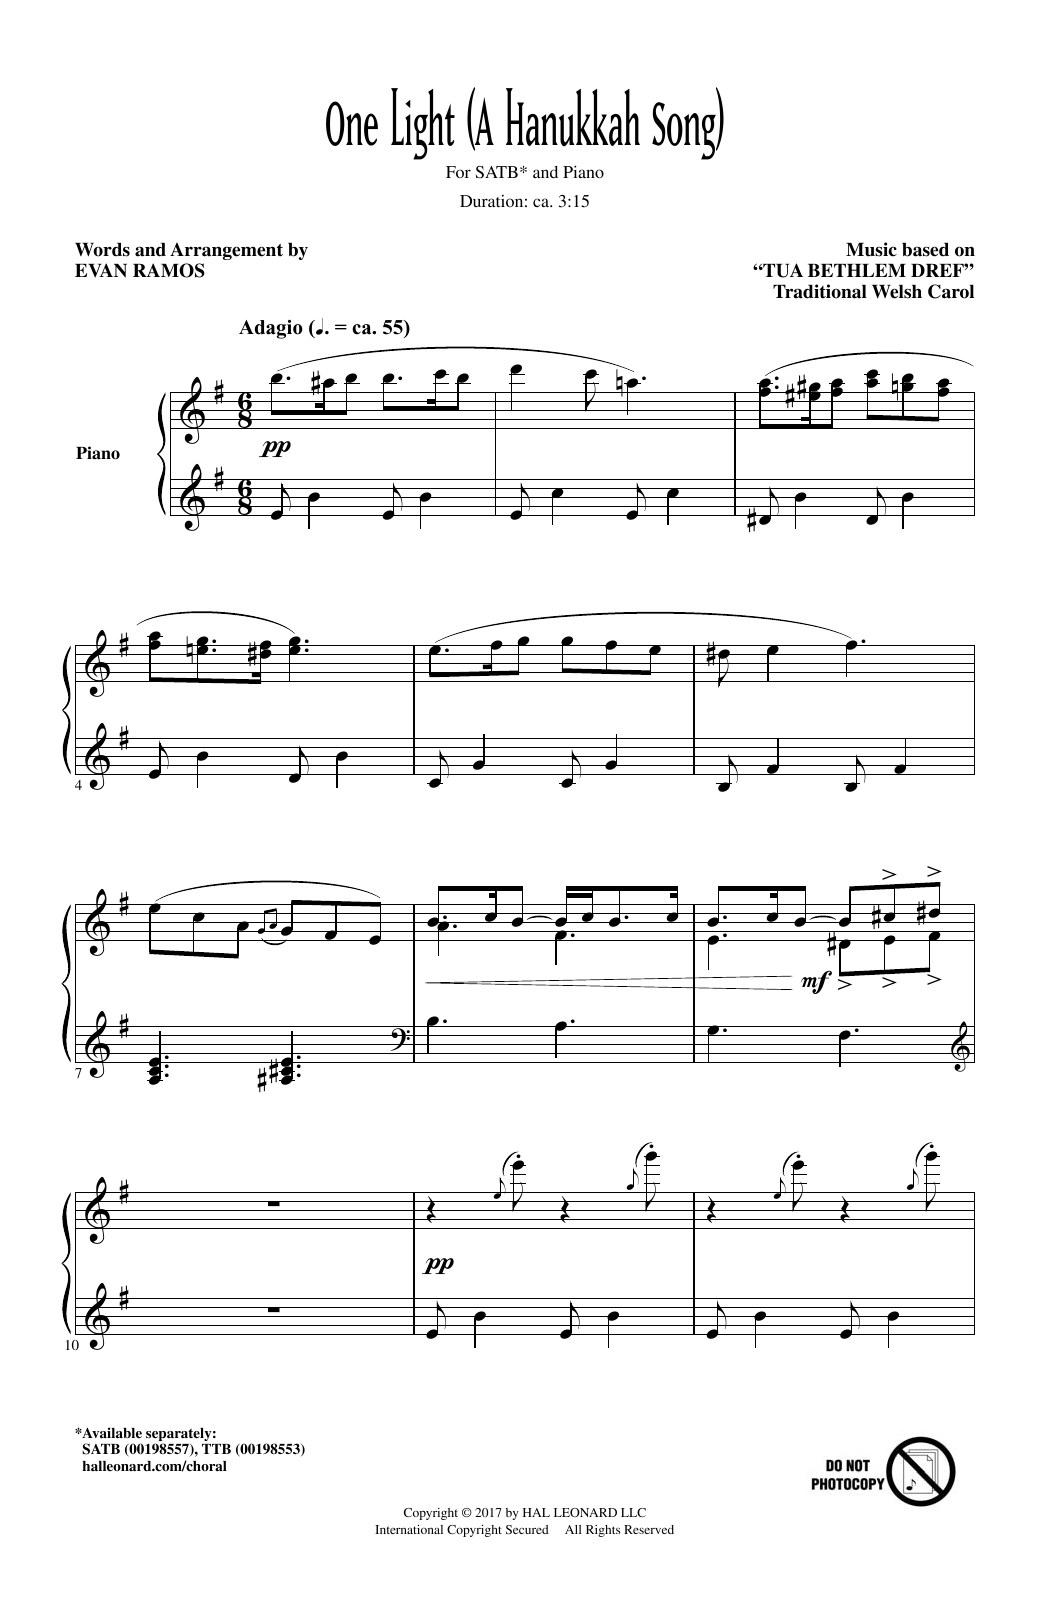 Evan Ramos One Light (A Hanukkah Song) Sheet Music Notes & Chords for TTBB - Download or Print PDF